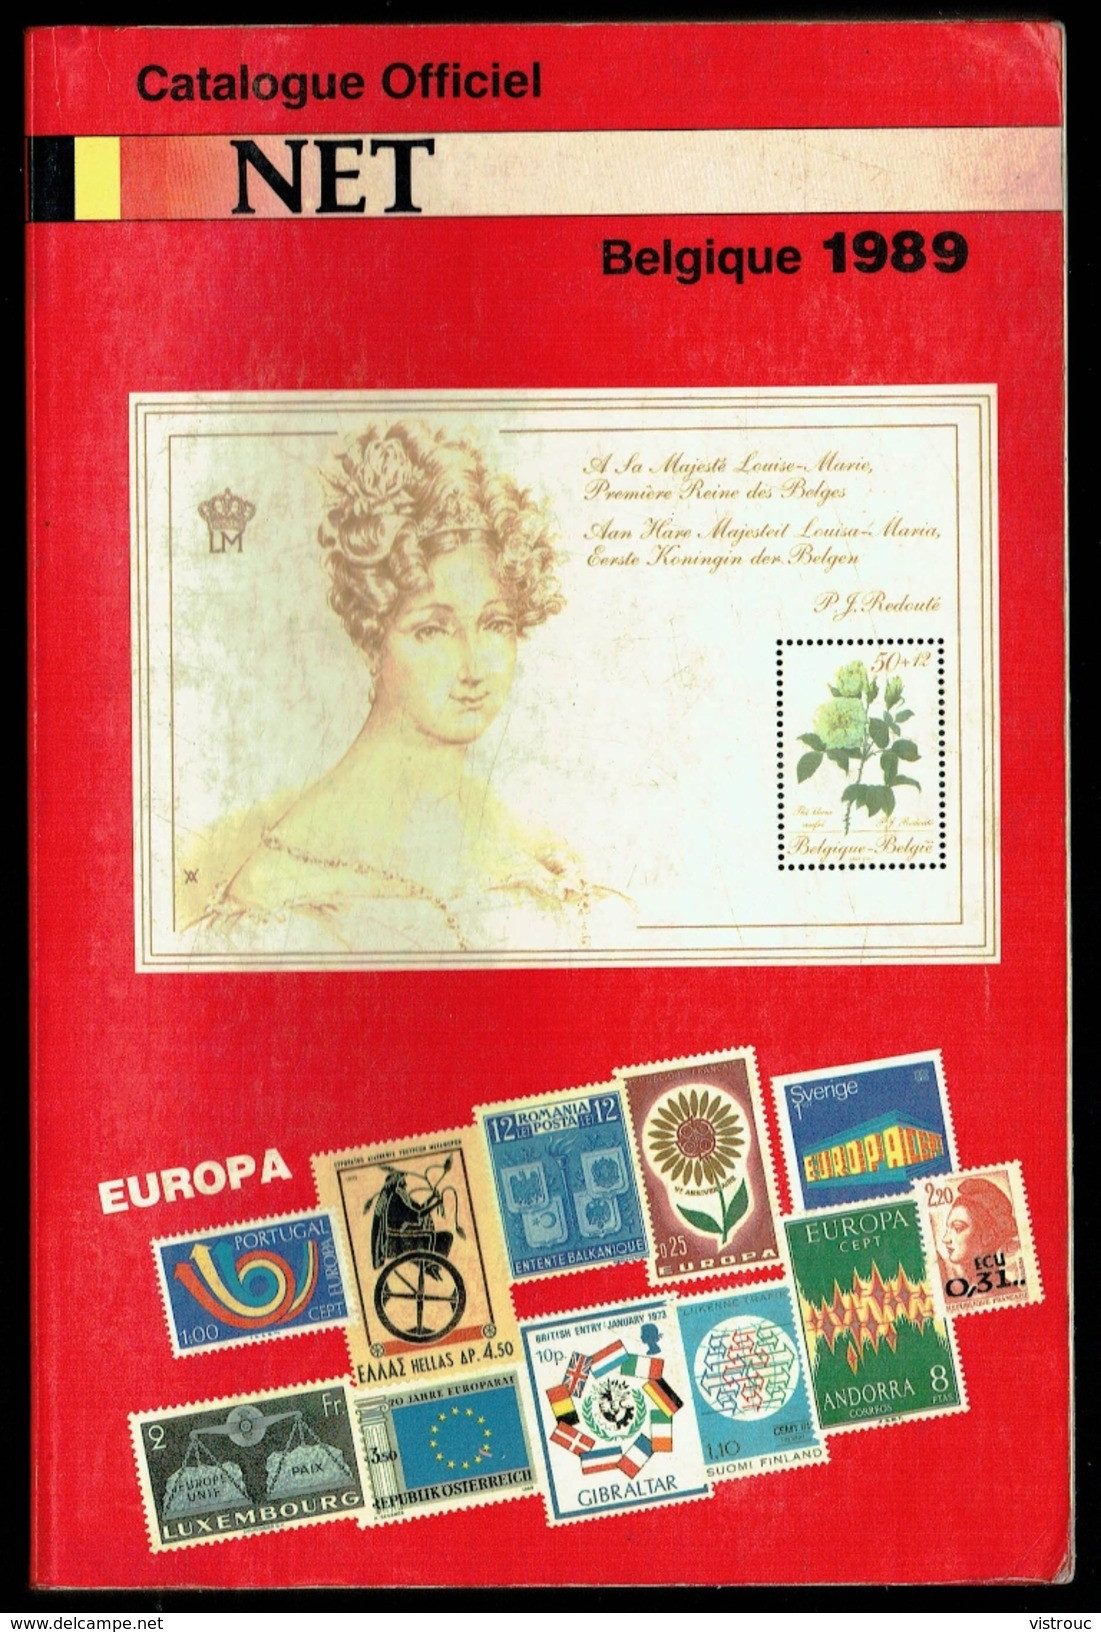 Catalogue Officiel NET (FR) 1989 - Timbres De Belgique. - Belgium